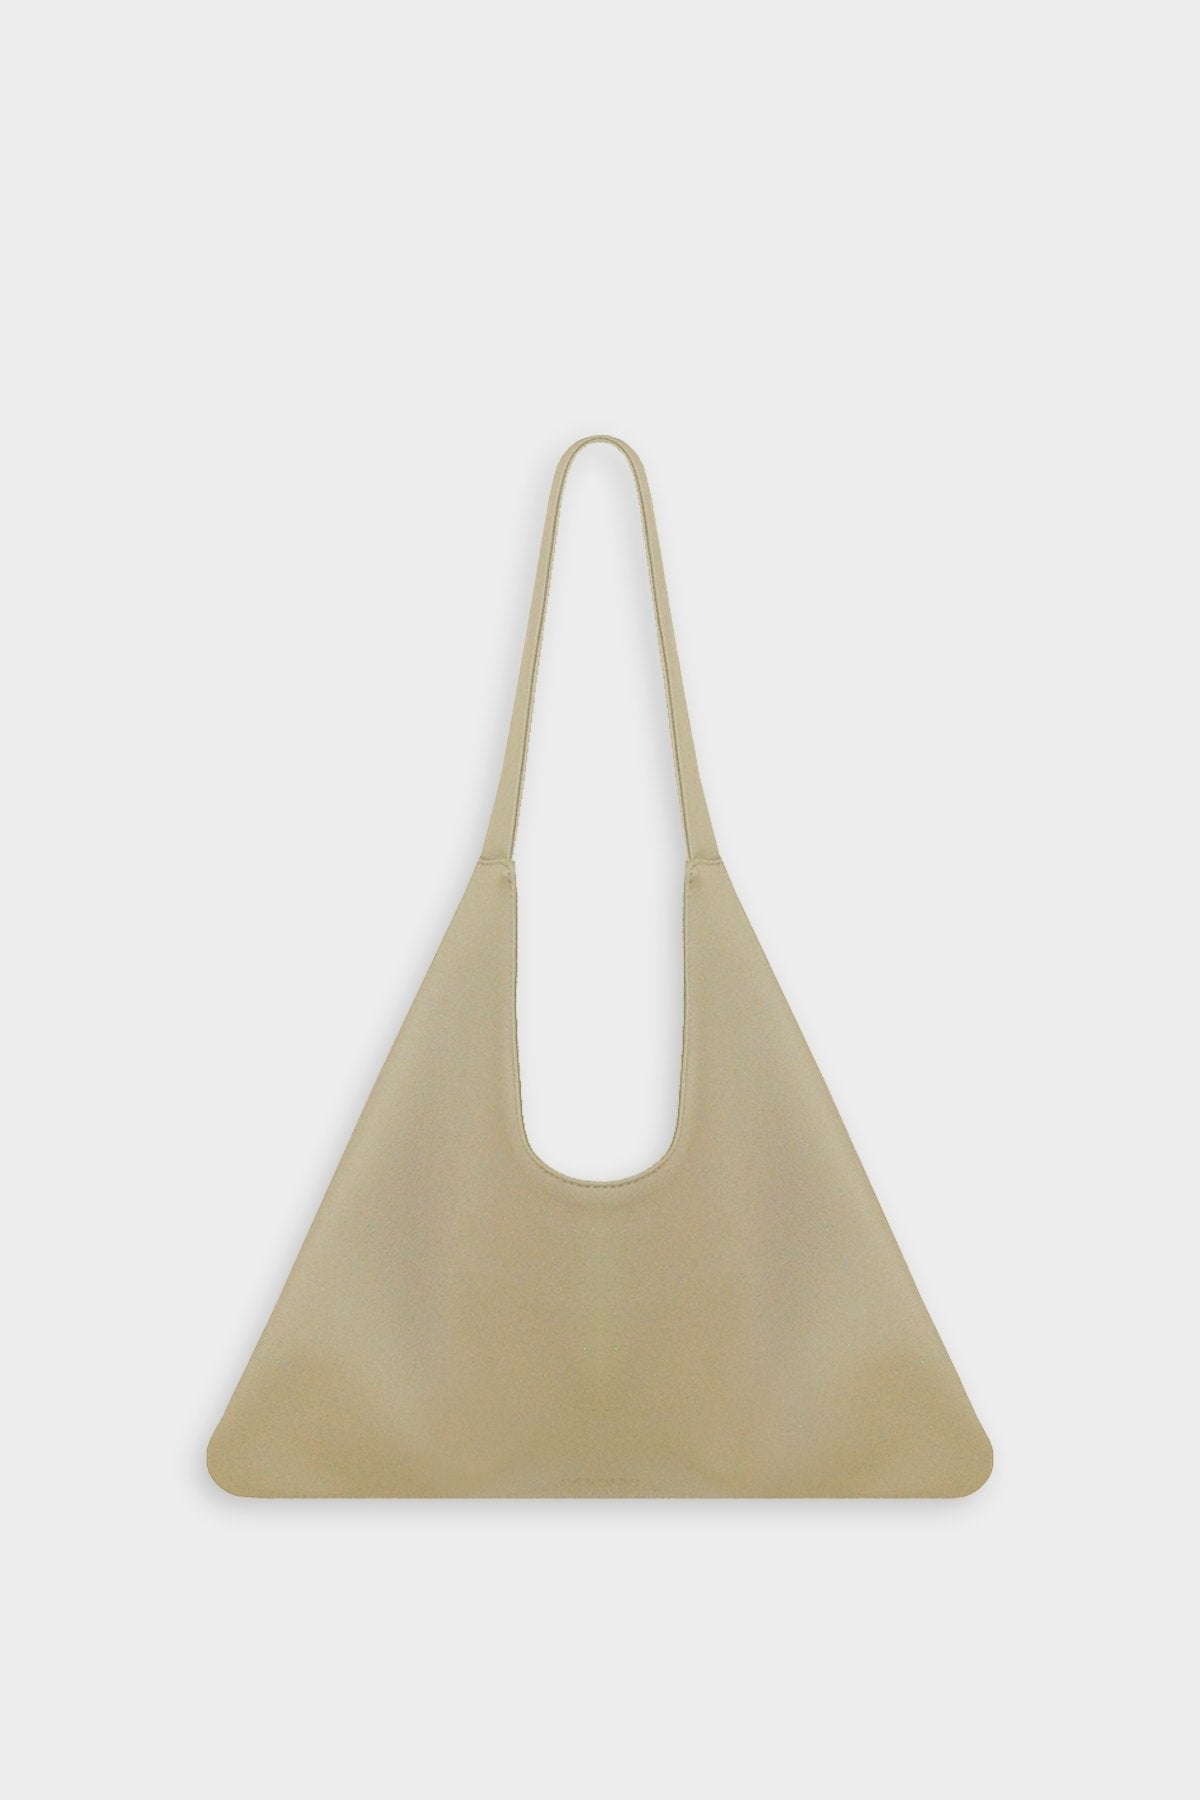 Agave Triangular Tote Bag in Beige - shop-olivia.com